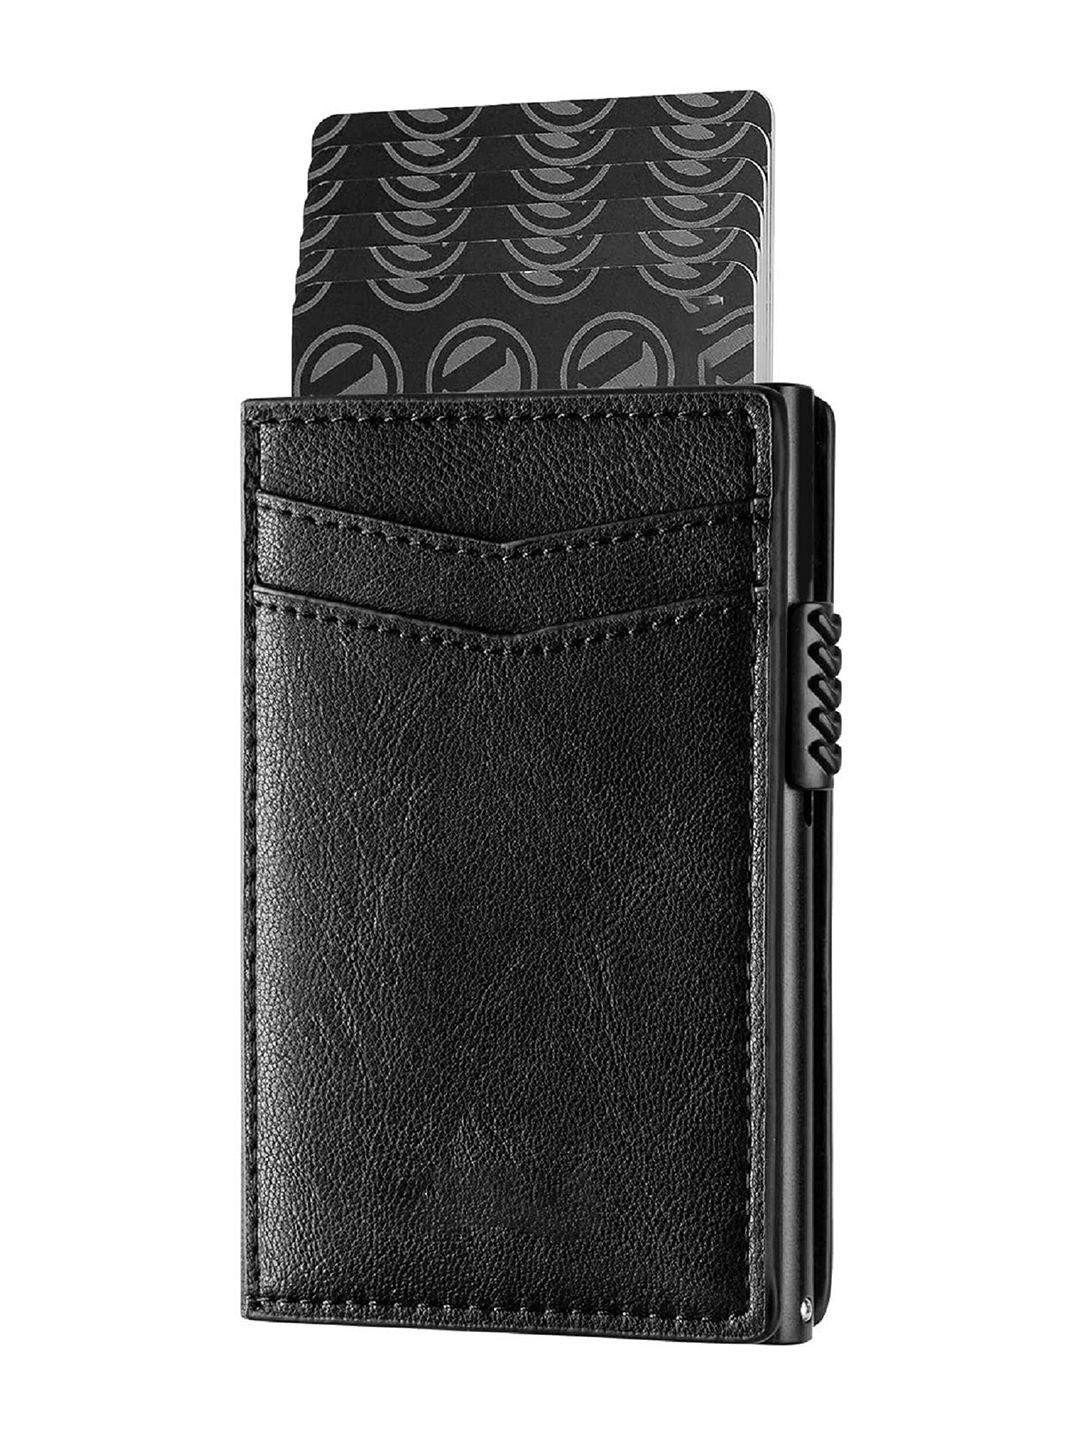 vogard unisex black leather card holder